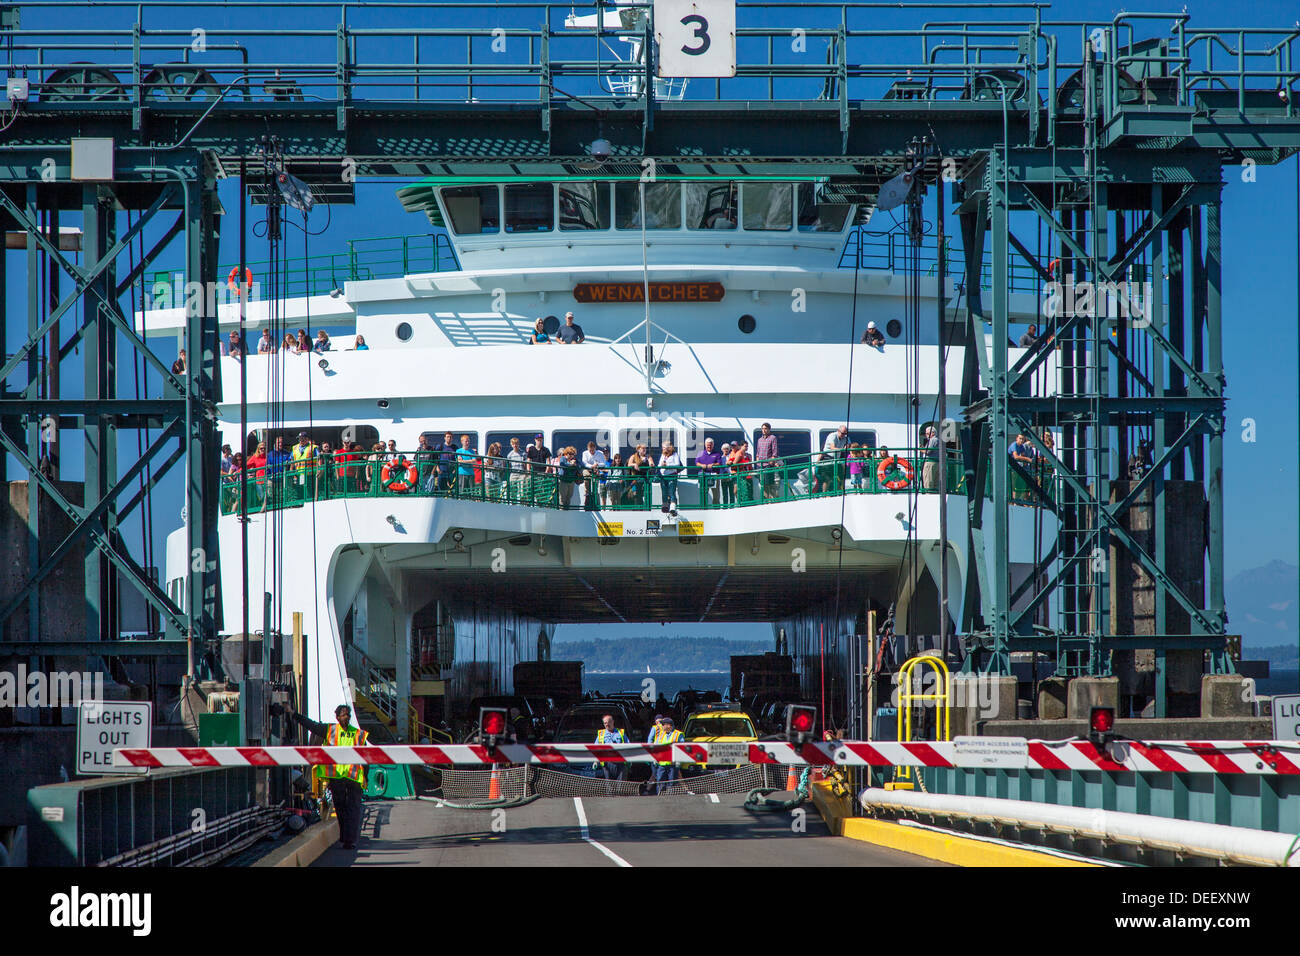 Bainbridge Island Ferry Boat Ankunft in Seattle Dock, Seattle, Washington, USA Stockfoto